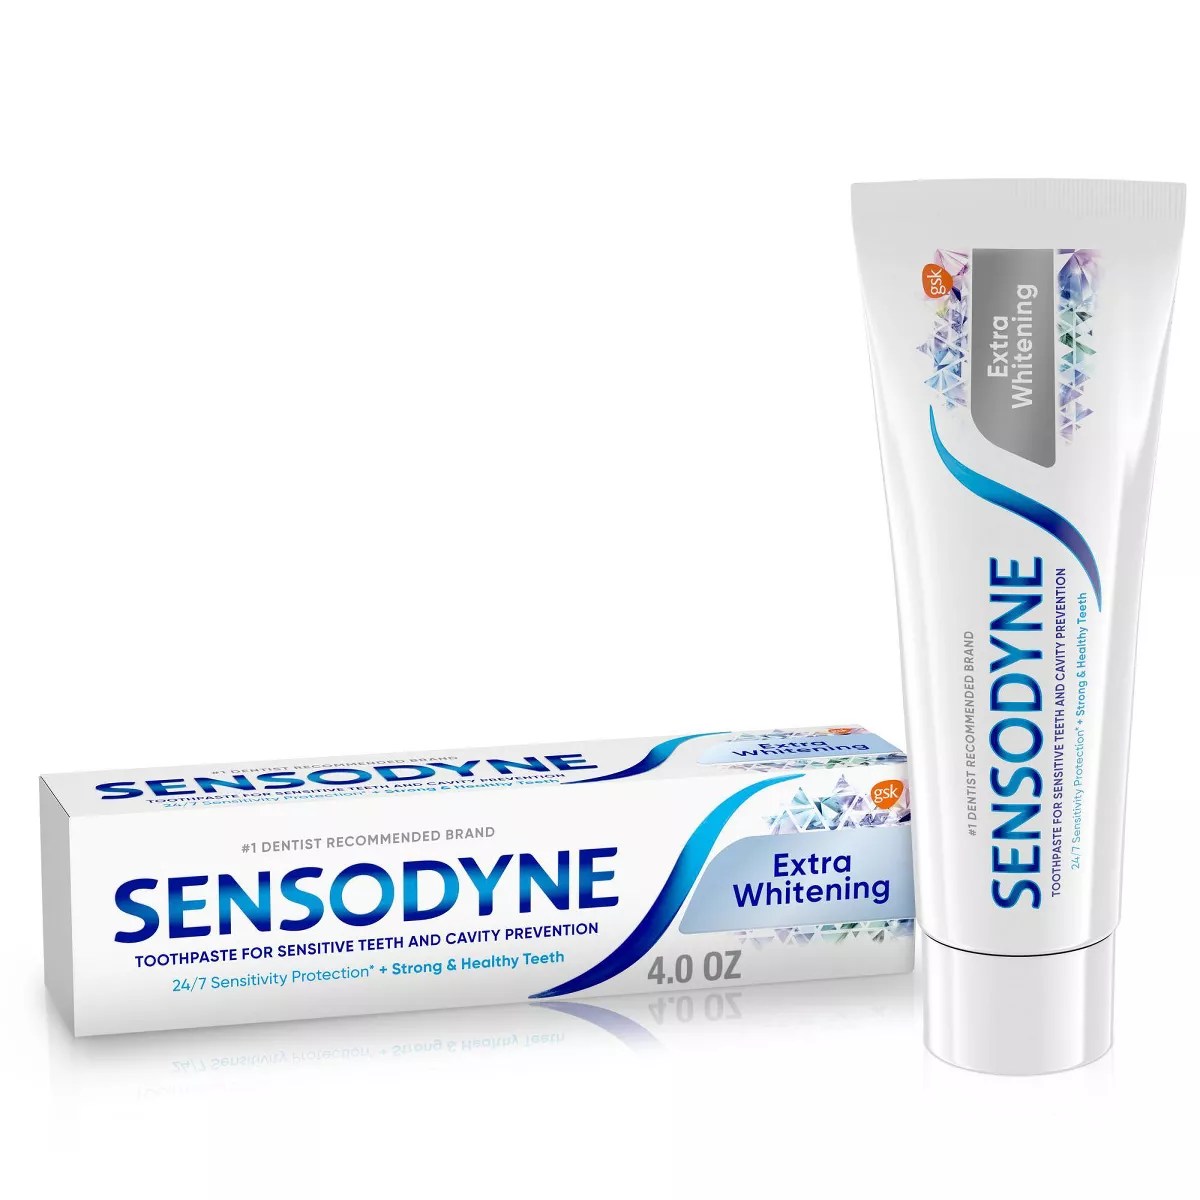 a tube of sensodyne extra whitening, one of the best whitening toothpastes